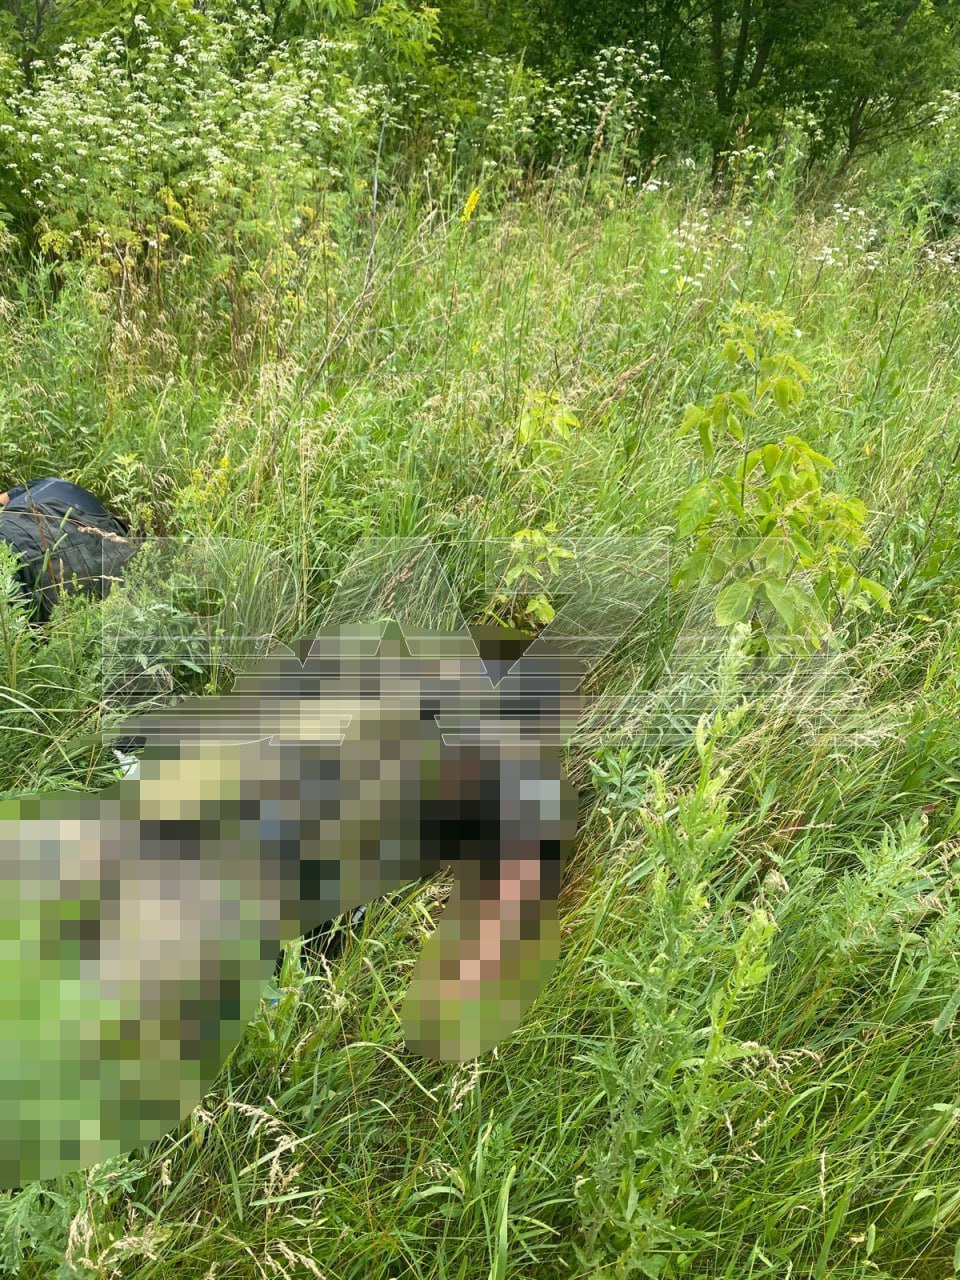 Чвк вагнер фото бойцов на украине